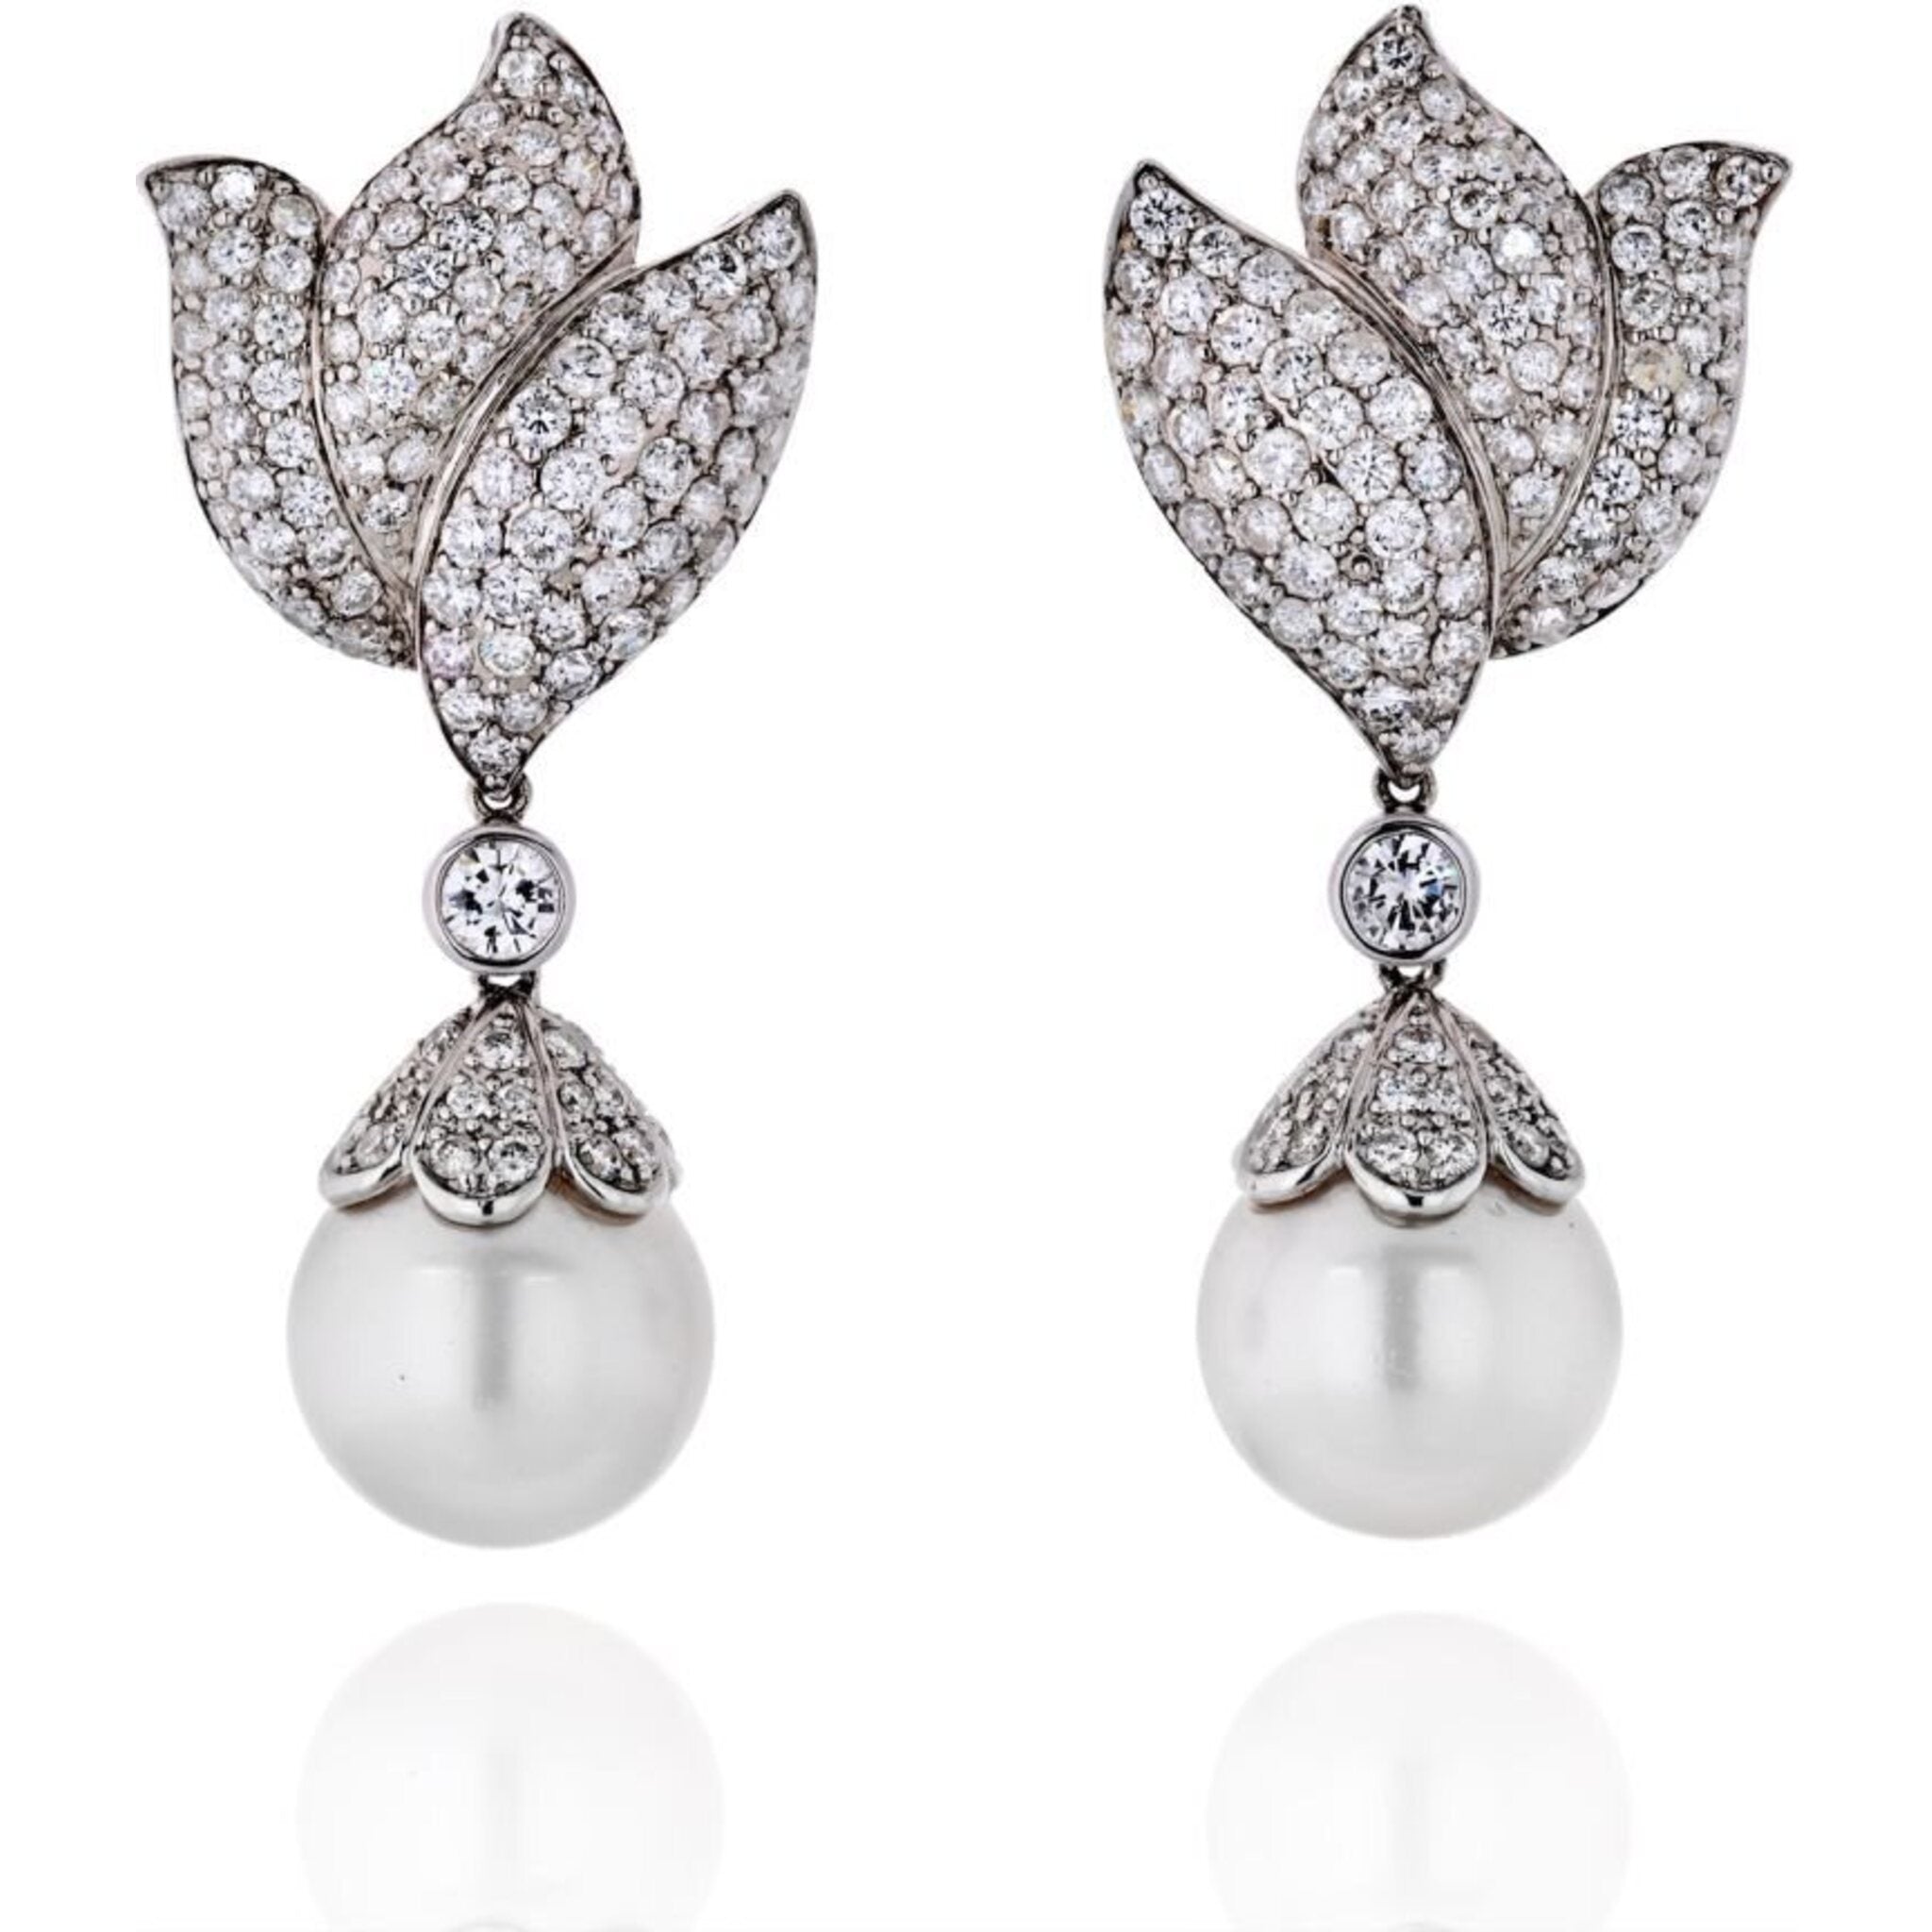 Hanging 18K White Gold Diamond & Hanging Pearl Earrings